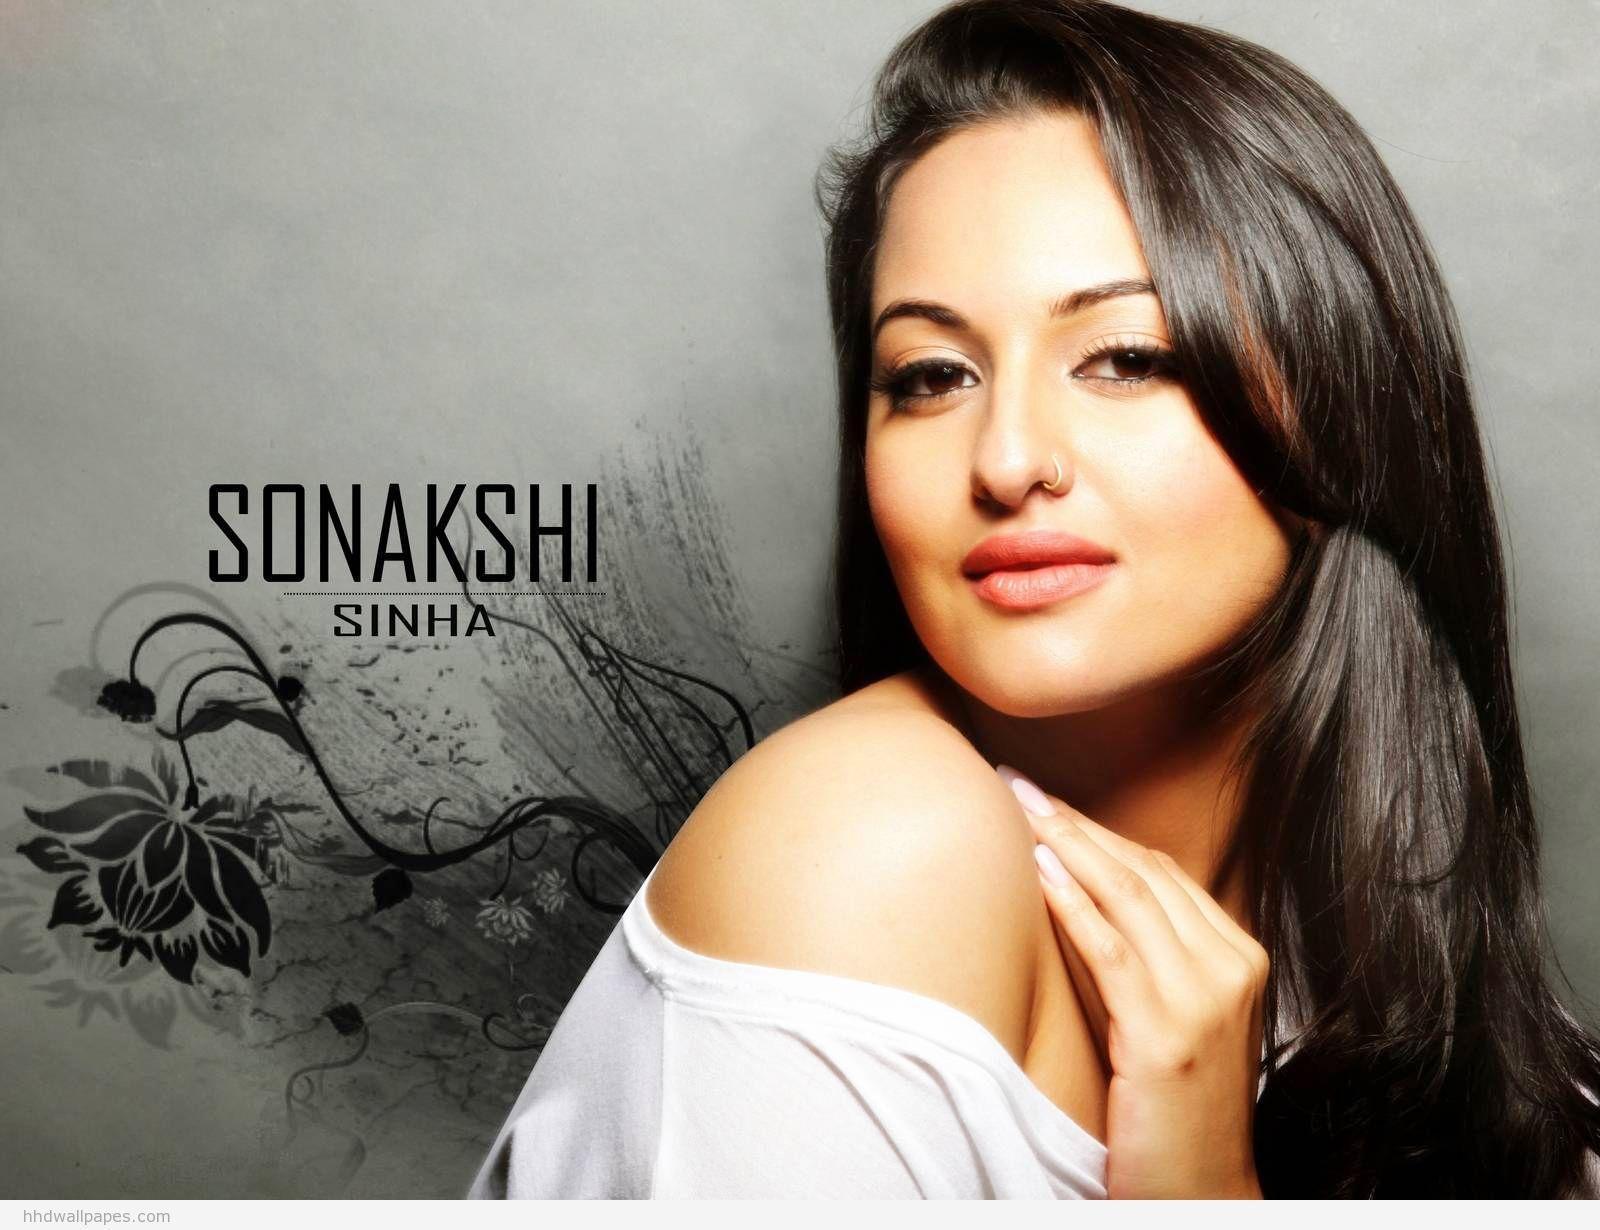 Download Free HD Wallpaper of Sonakshi Sinha Download Free HD